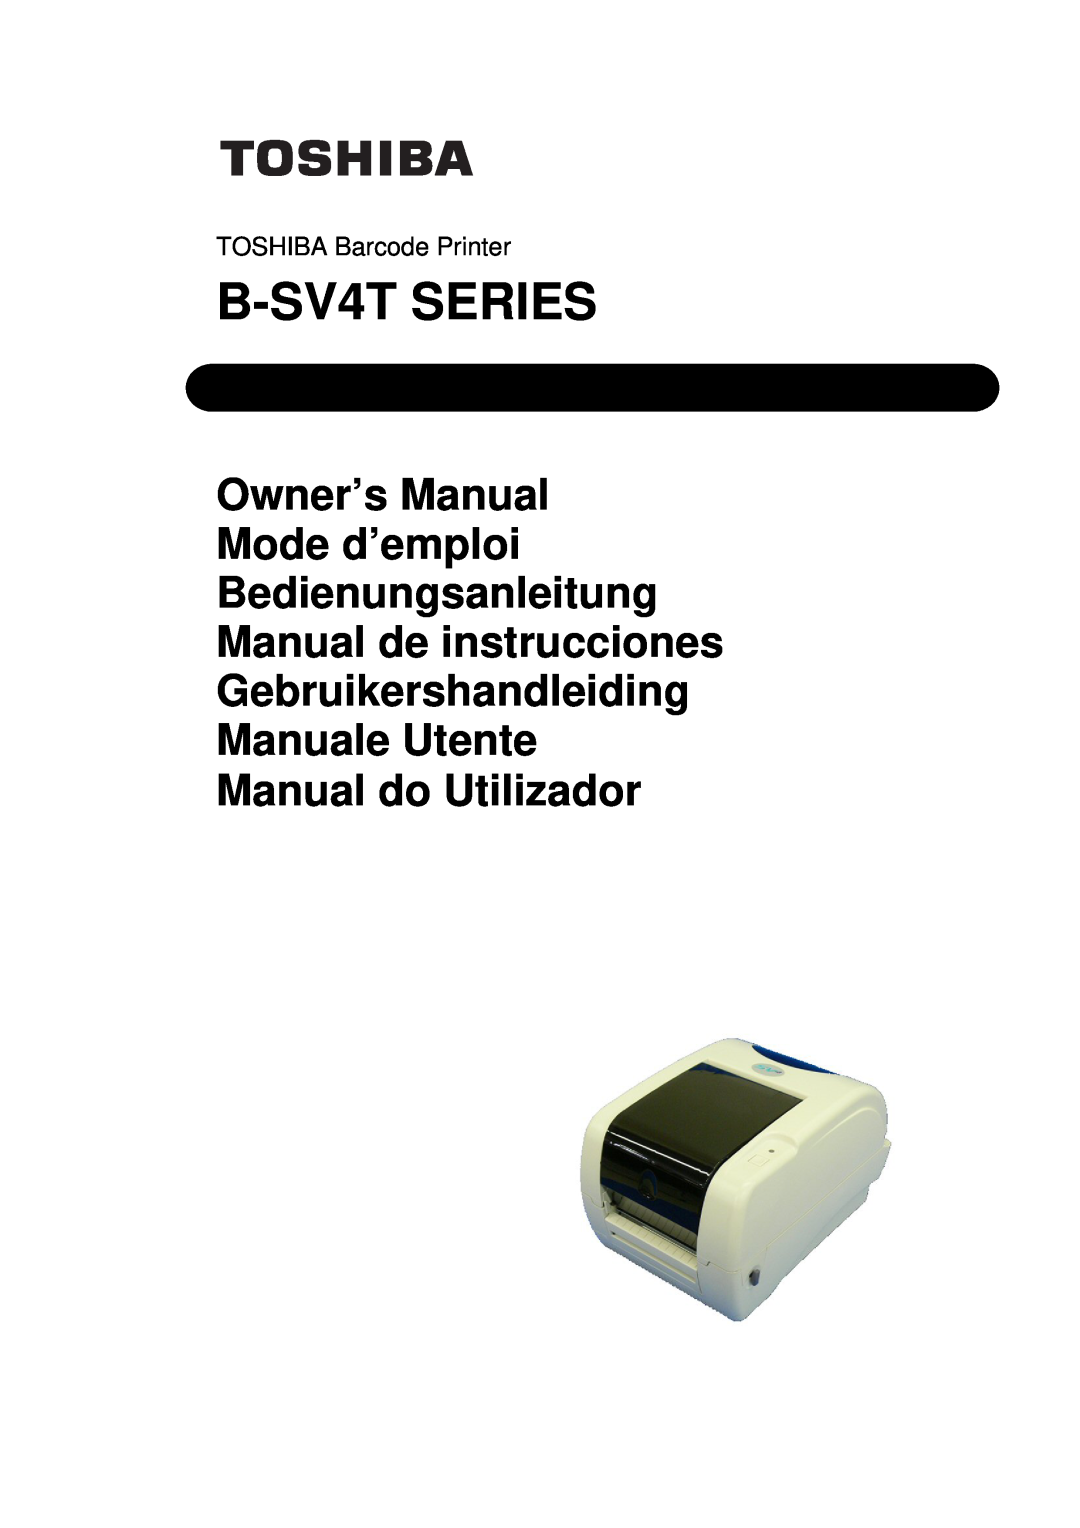 Toshiba owner manual B-SV4T SERIES, TOSHIBA Barcode Printer 